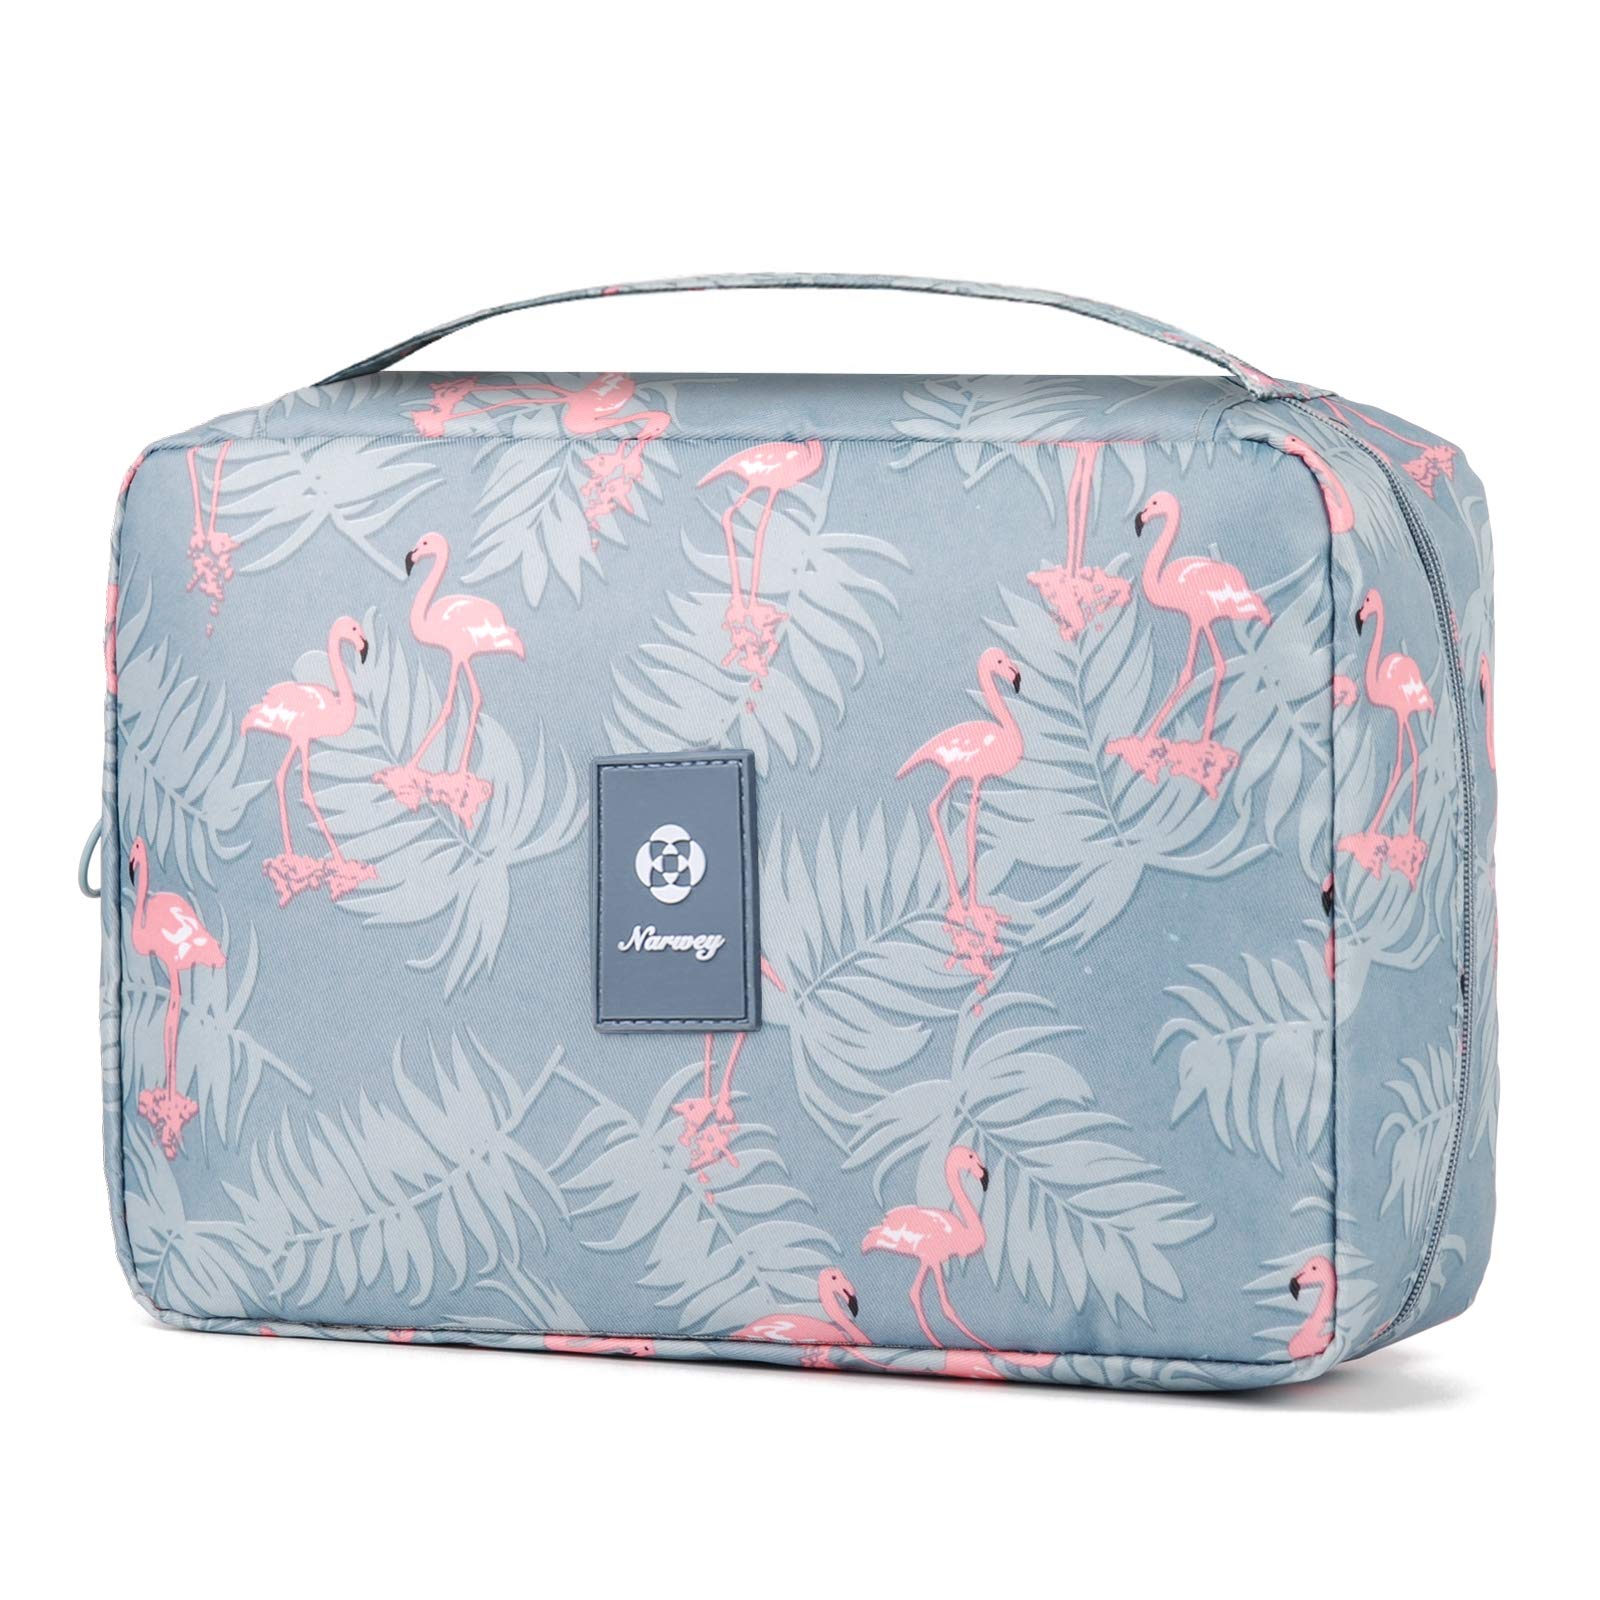 Narwey Hanging Toiletry Bag for Women Travel Makeup Bag Organizer Toiletries Bag for Cosmetics Essentials Accessories Flamingo